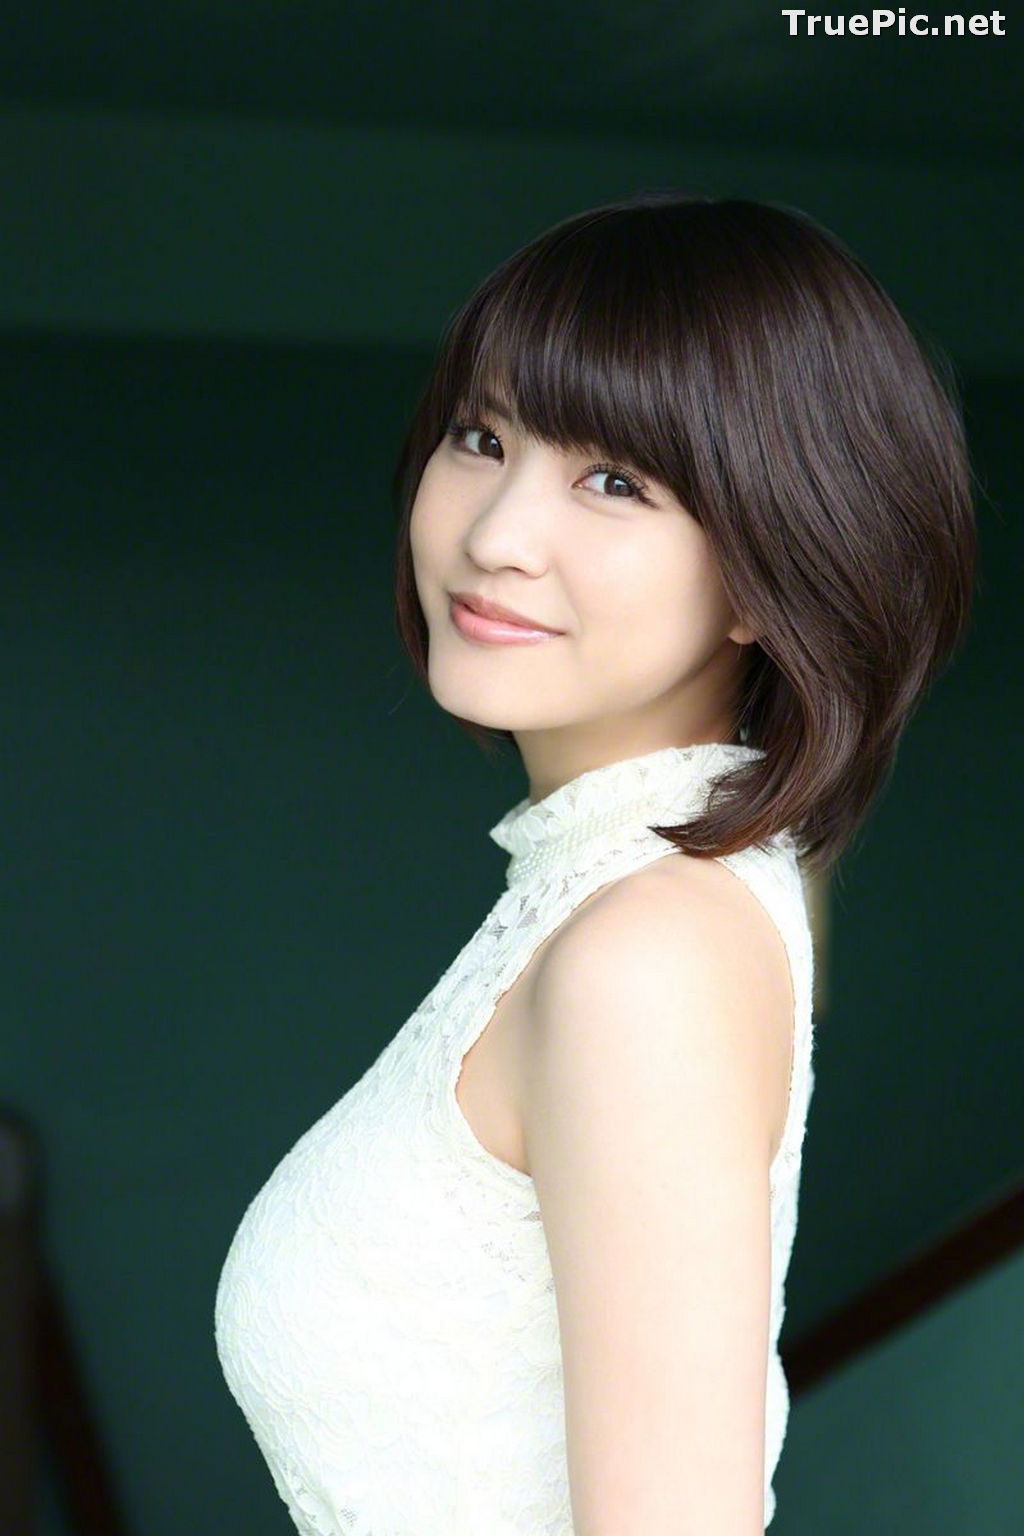 Image Wanibooks NO.122 - Japanese Gravure Idol and Actress - Asuka Kishi - TruePic.net - Picture-53